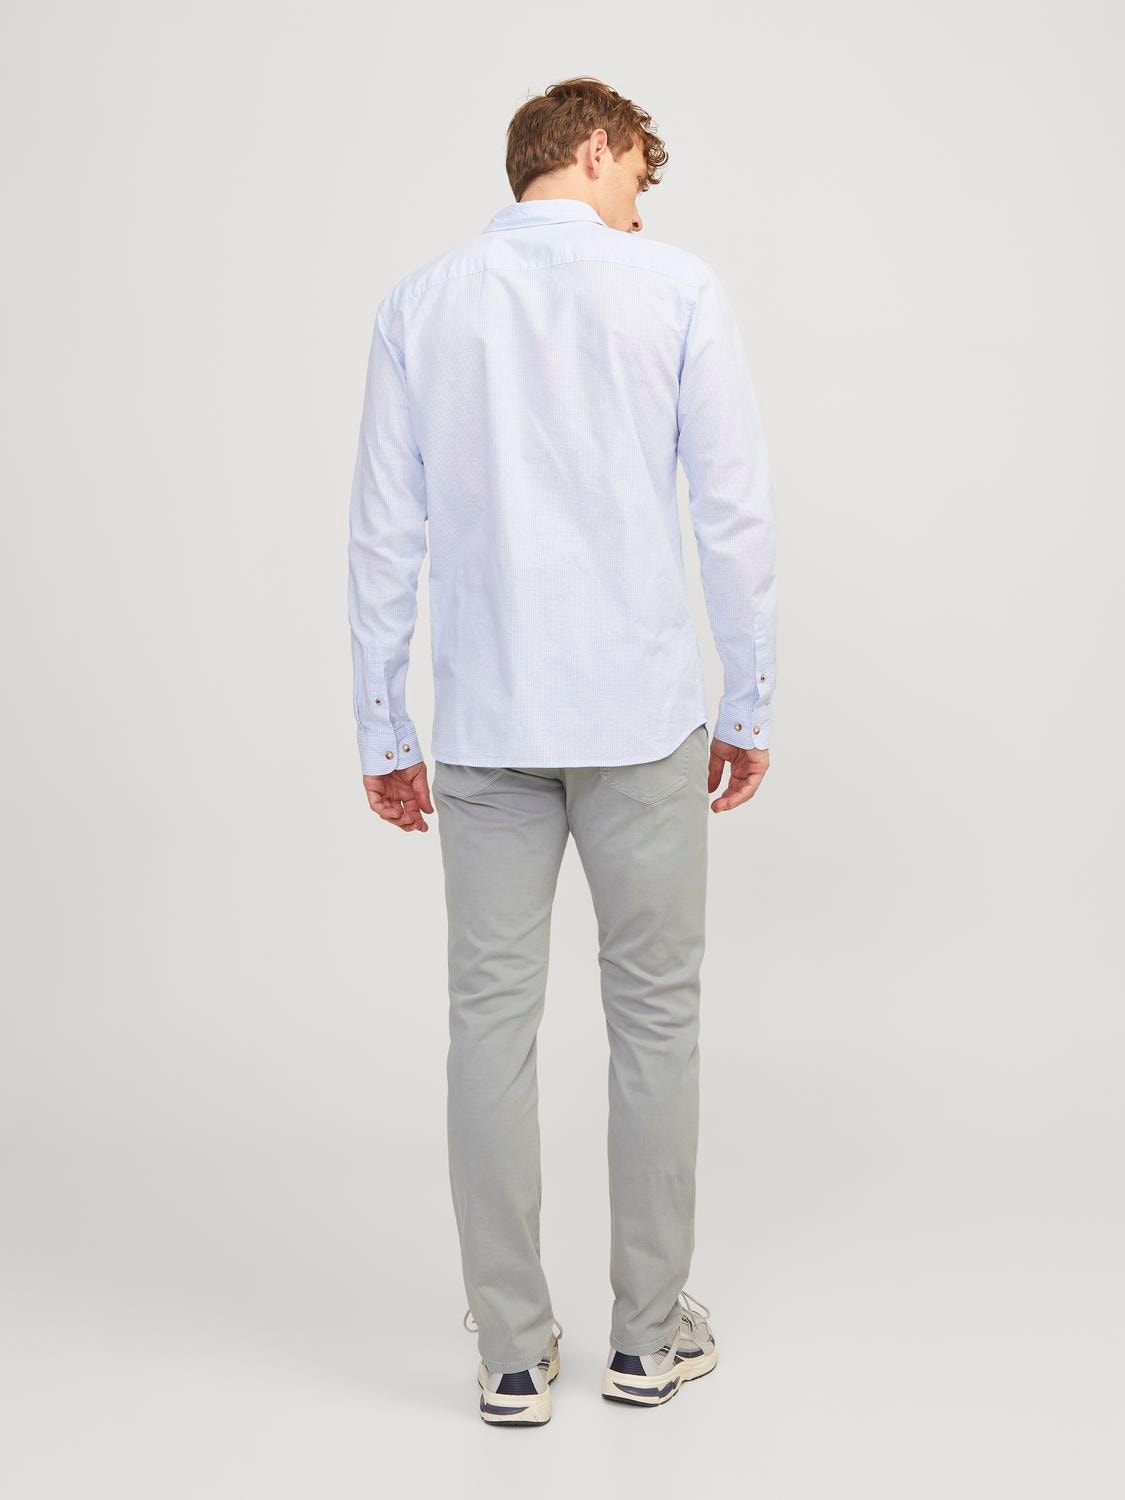 Jack & Jones Pantaloni chino Slim Fit -Ultimate Grey - 12248680